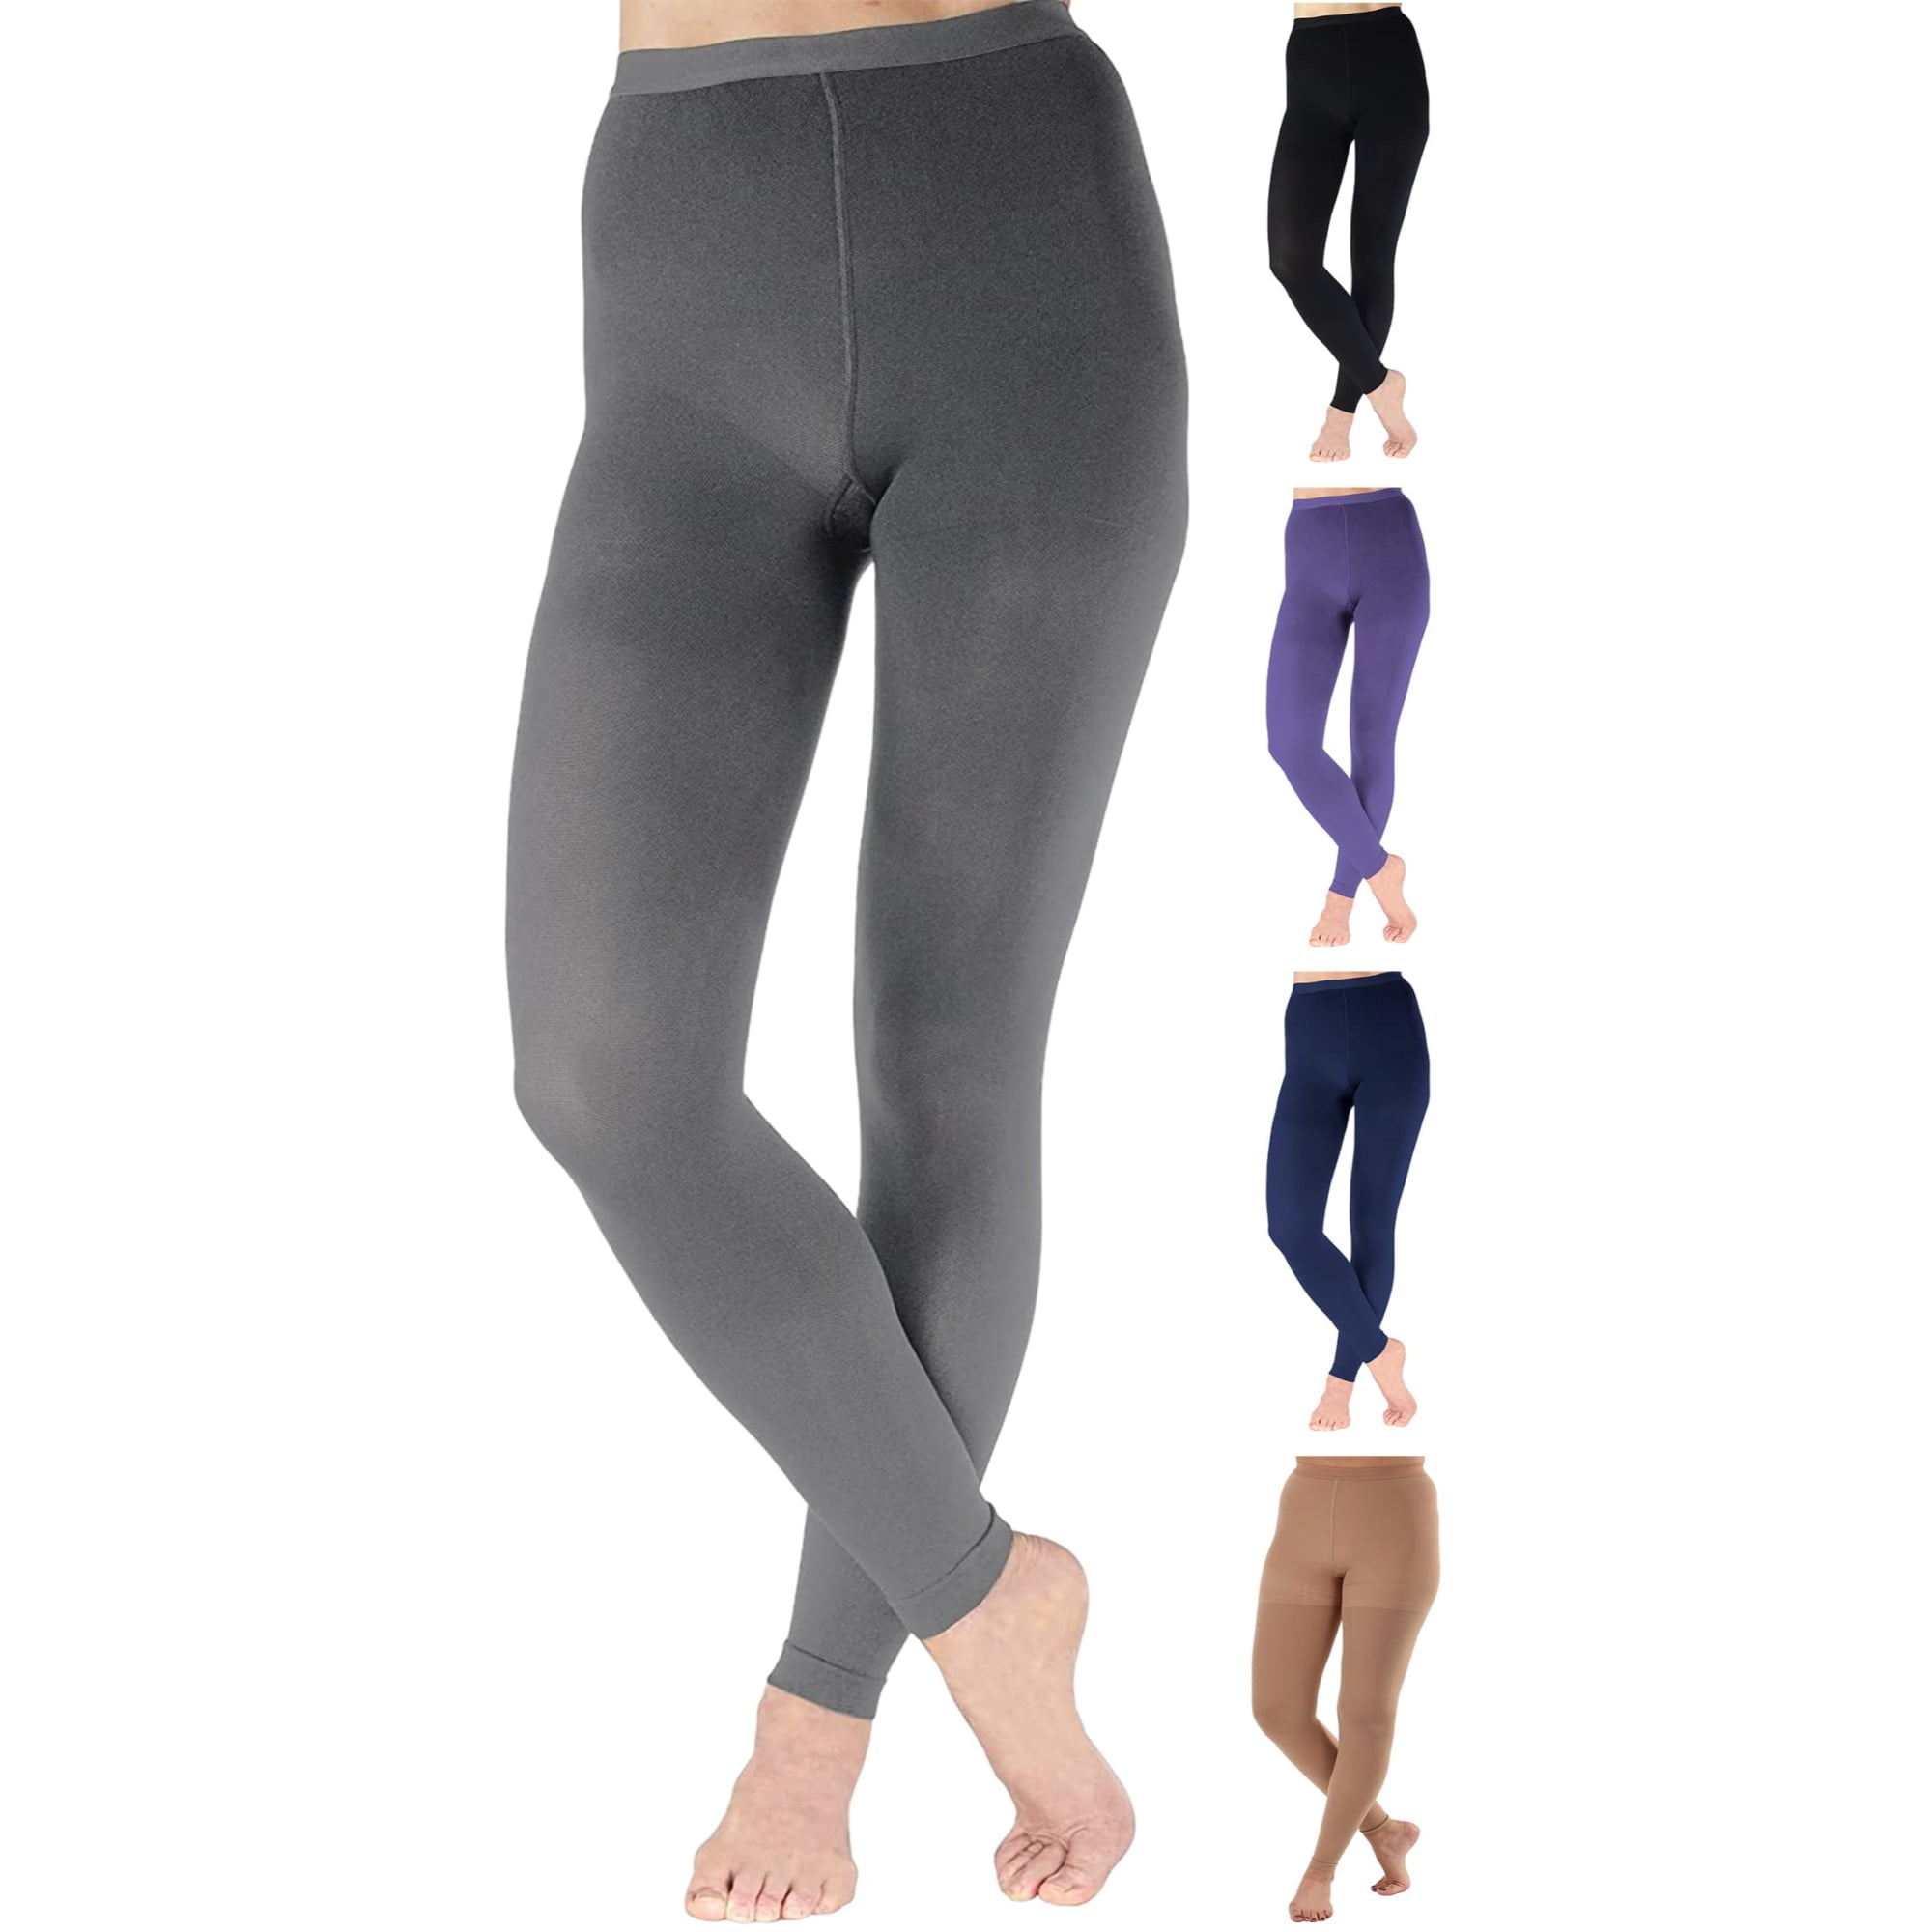 5XL Plus Size Compression Pantyhose for Women 20-30mmHg - Grey, 5X-Large 